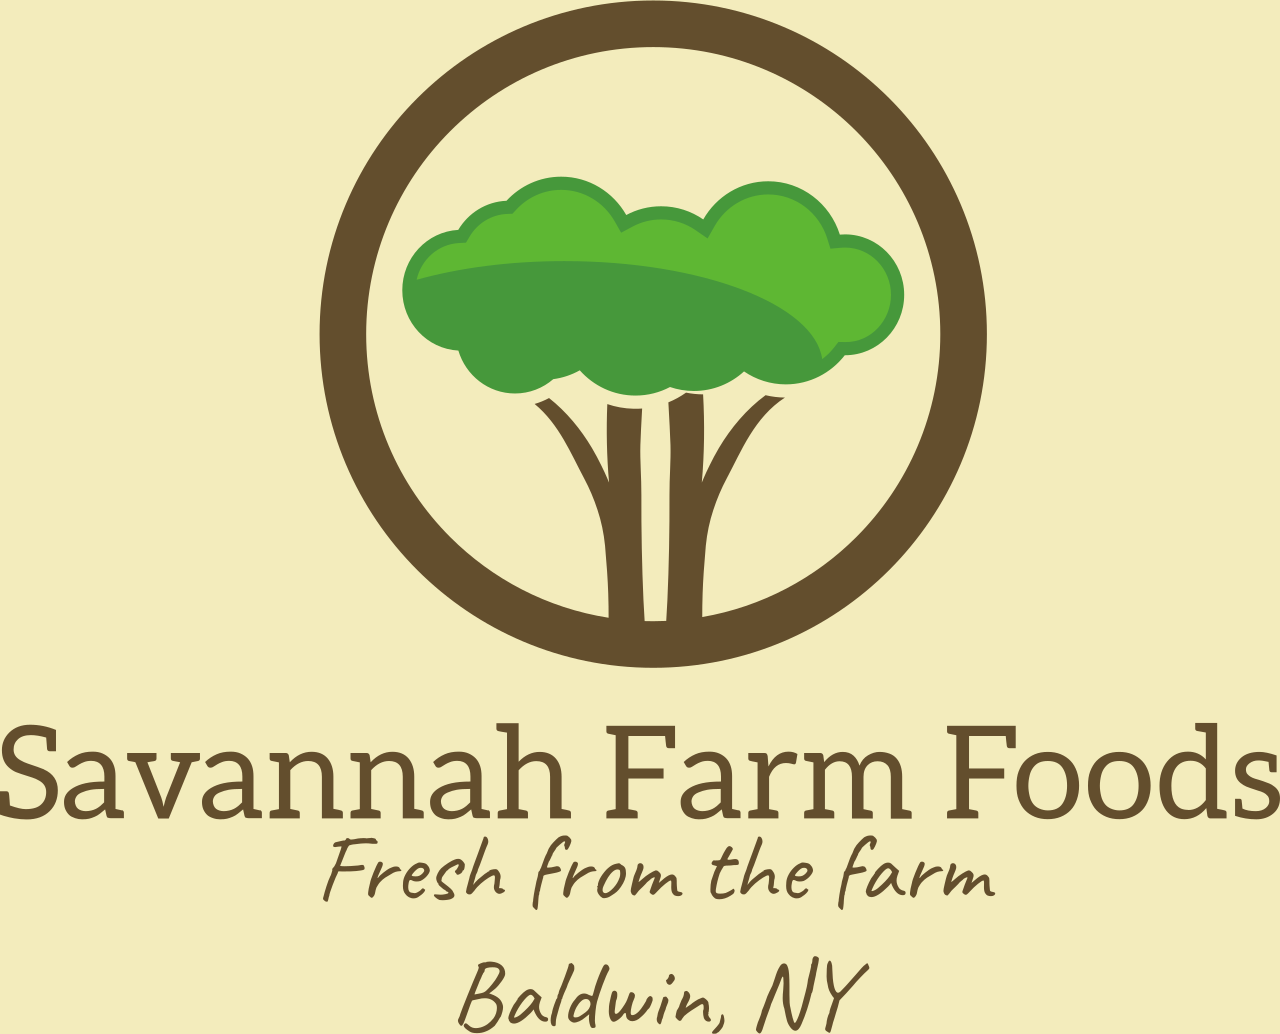 Savannah Farm Foods 's web page